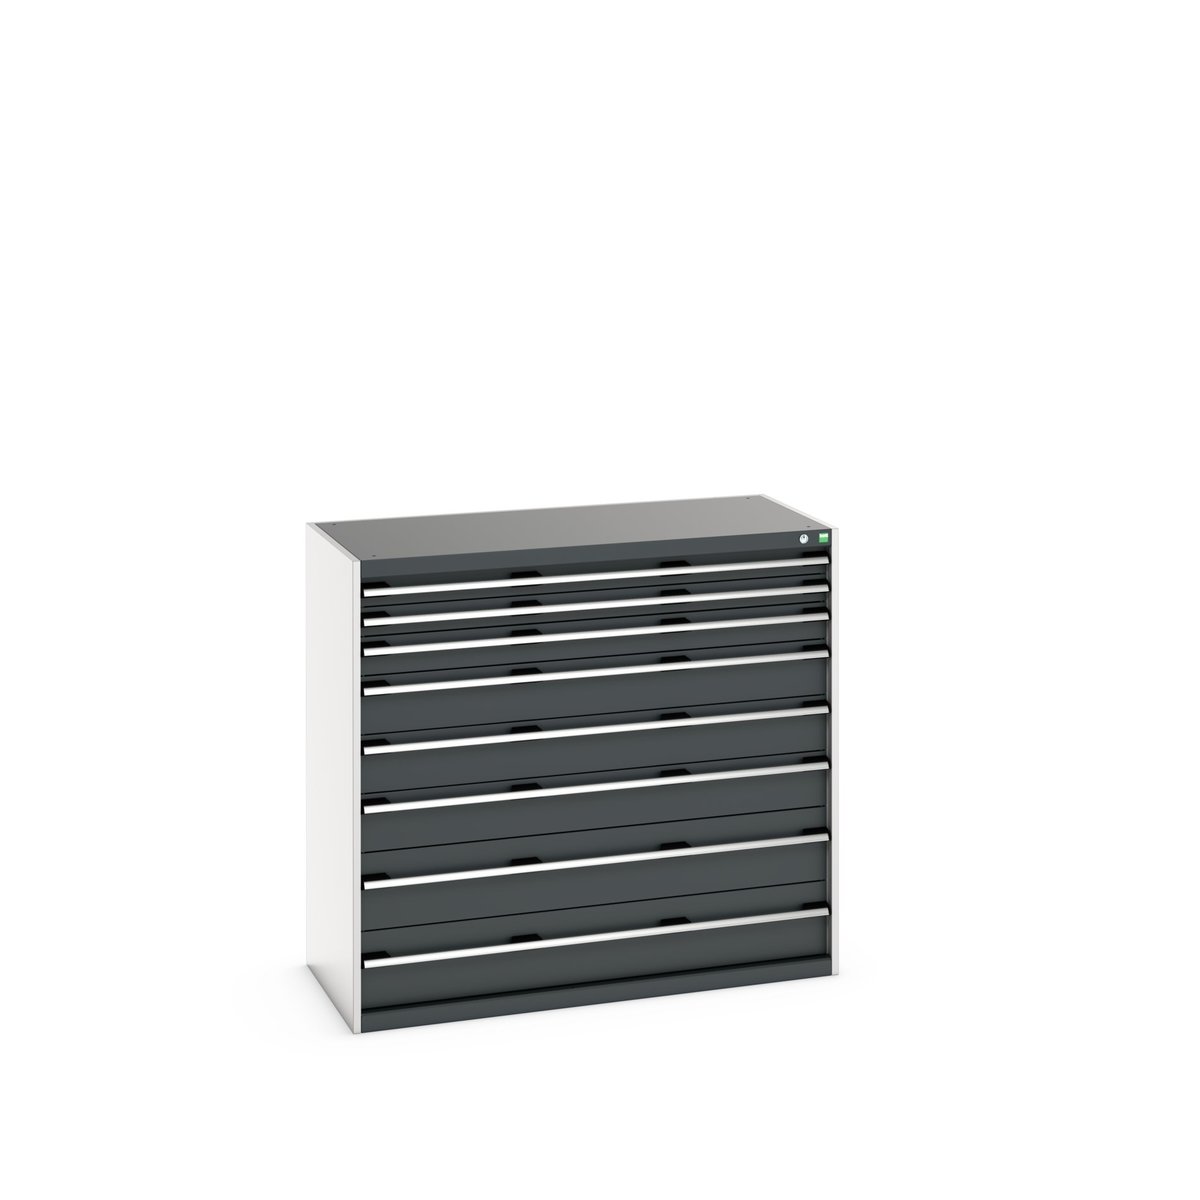 40022130. - cubio drawer cabinet